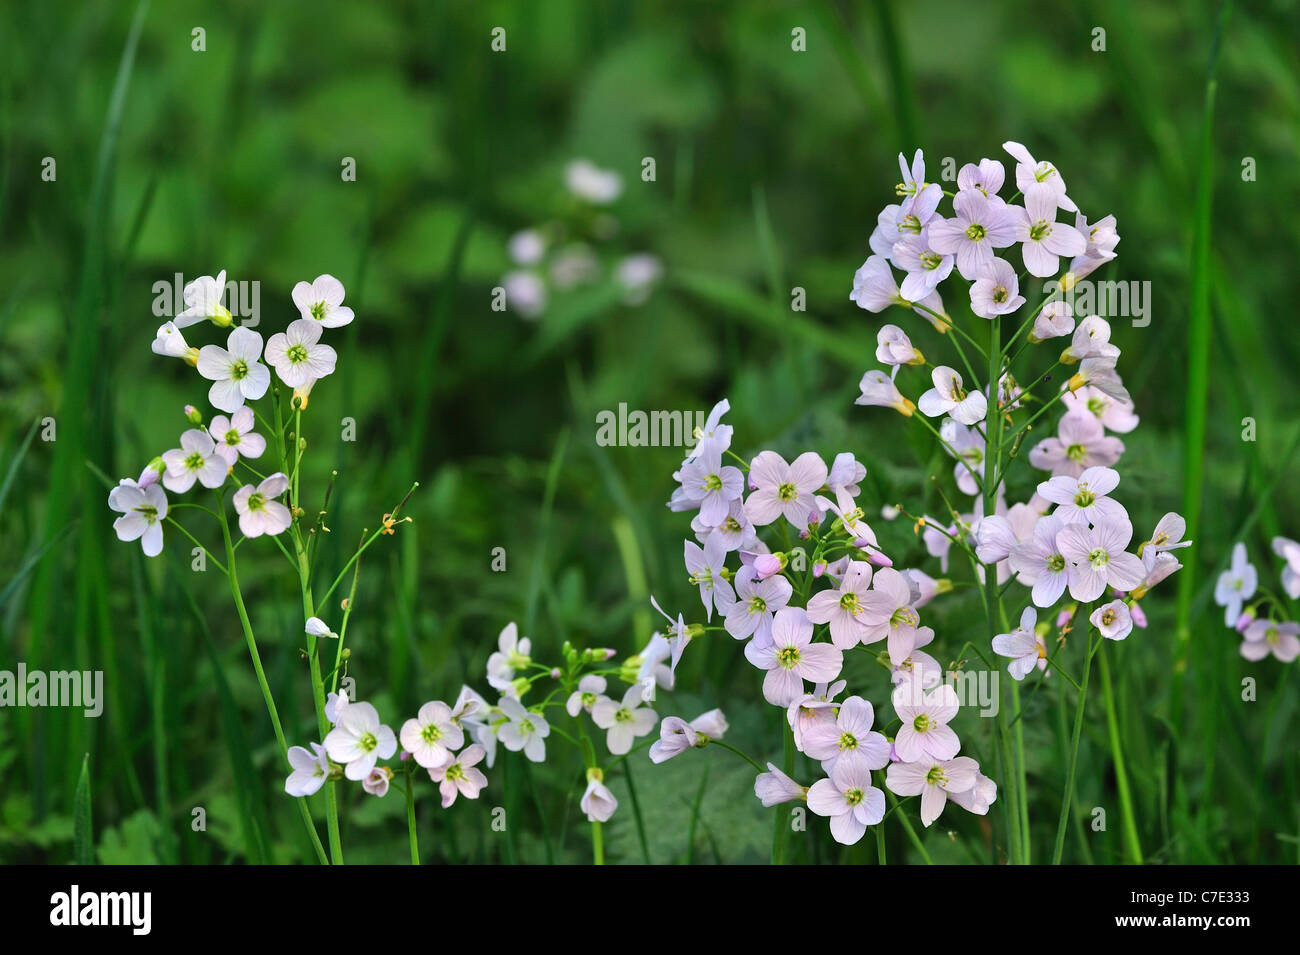 Cuckoo Flower / Lady's Smock (Cardamine pratensis) flowering in meadow Stock Photo